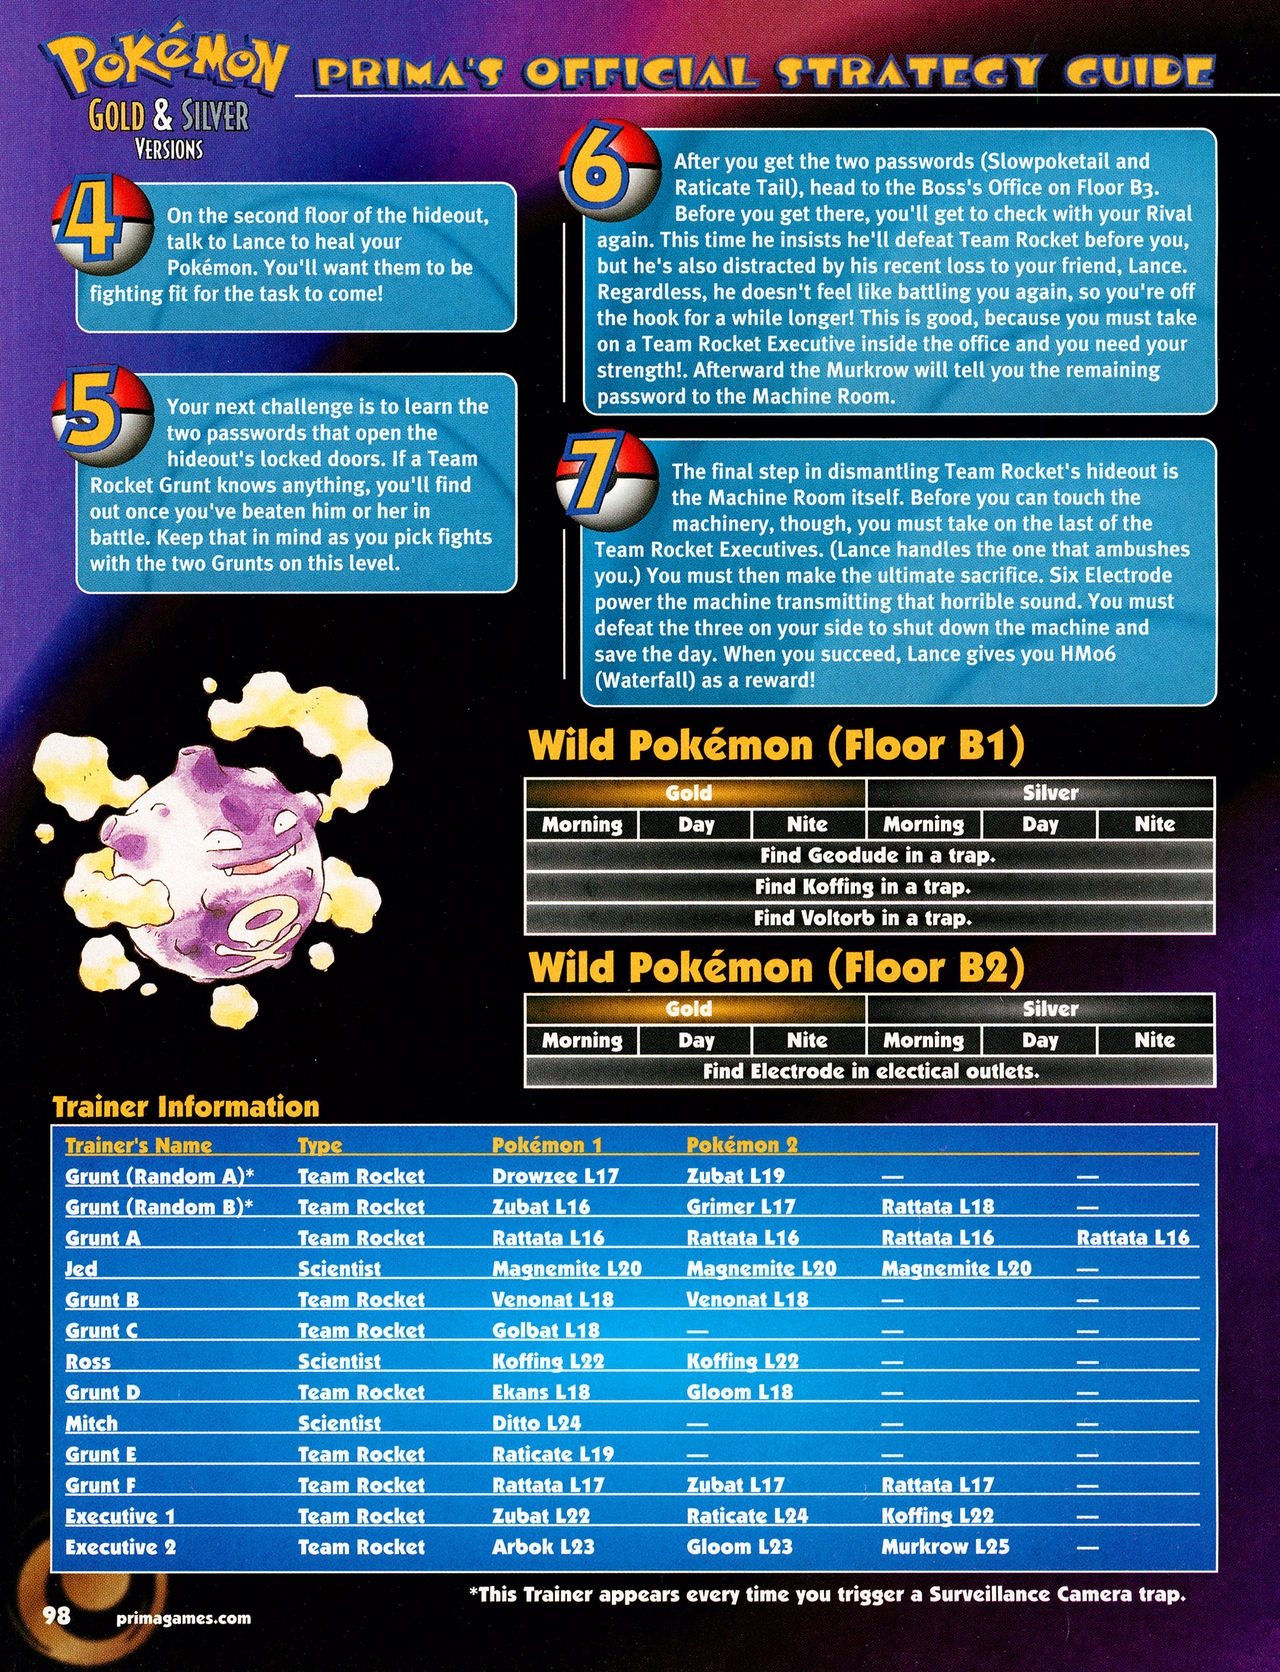 Pokémon Gold & Silver Versions - Strategy Guide 99